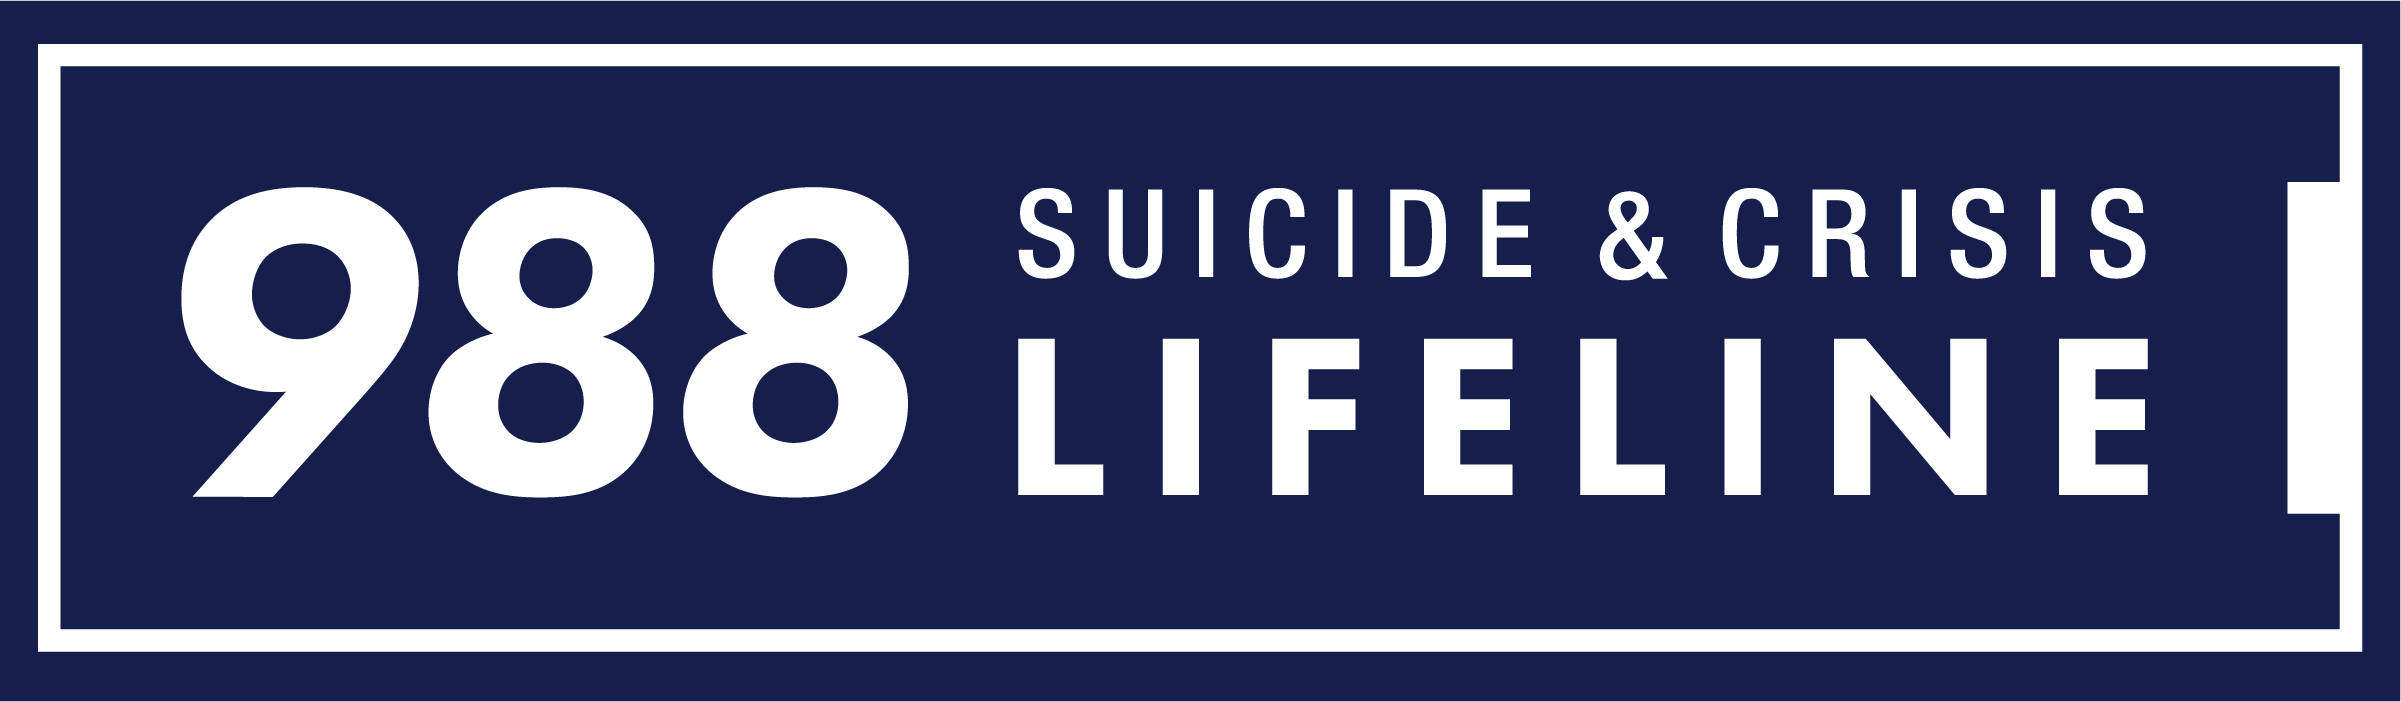 Suicide & Crisis Lifeline 988